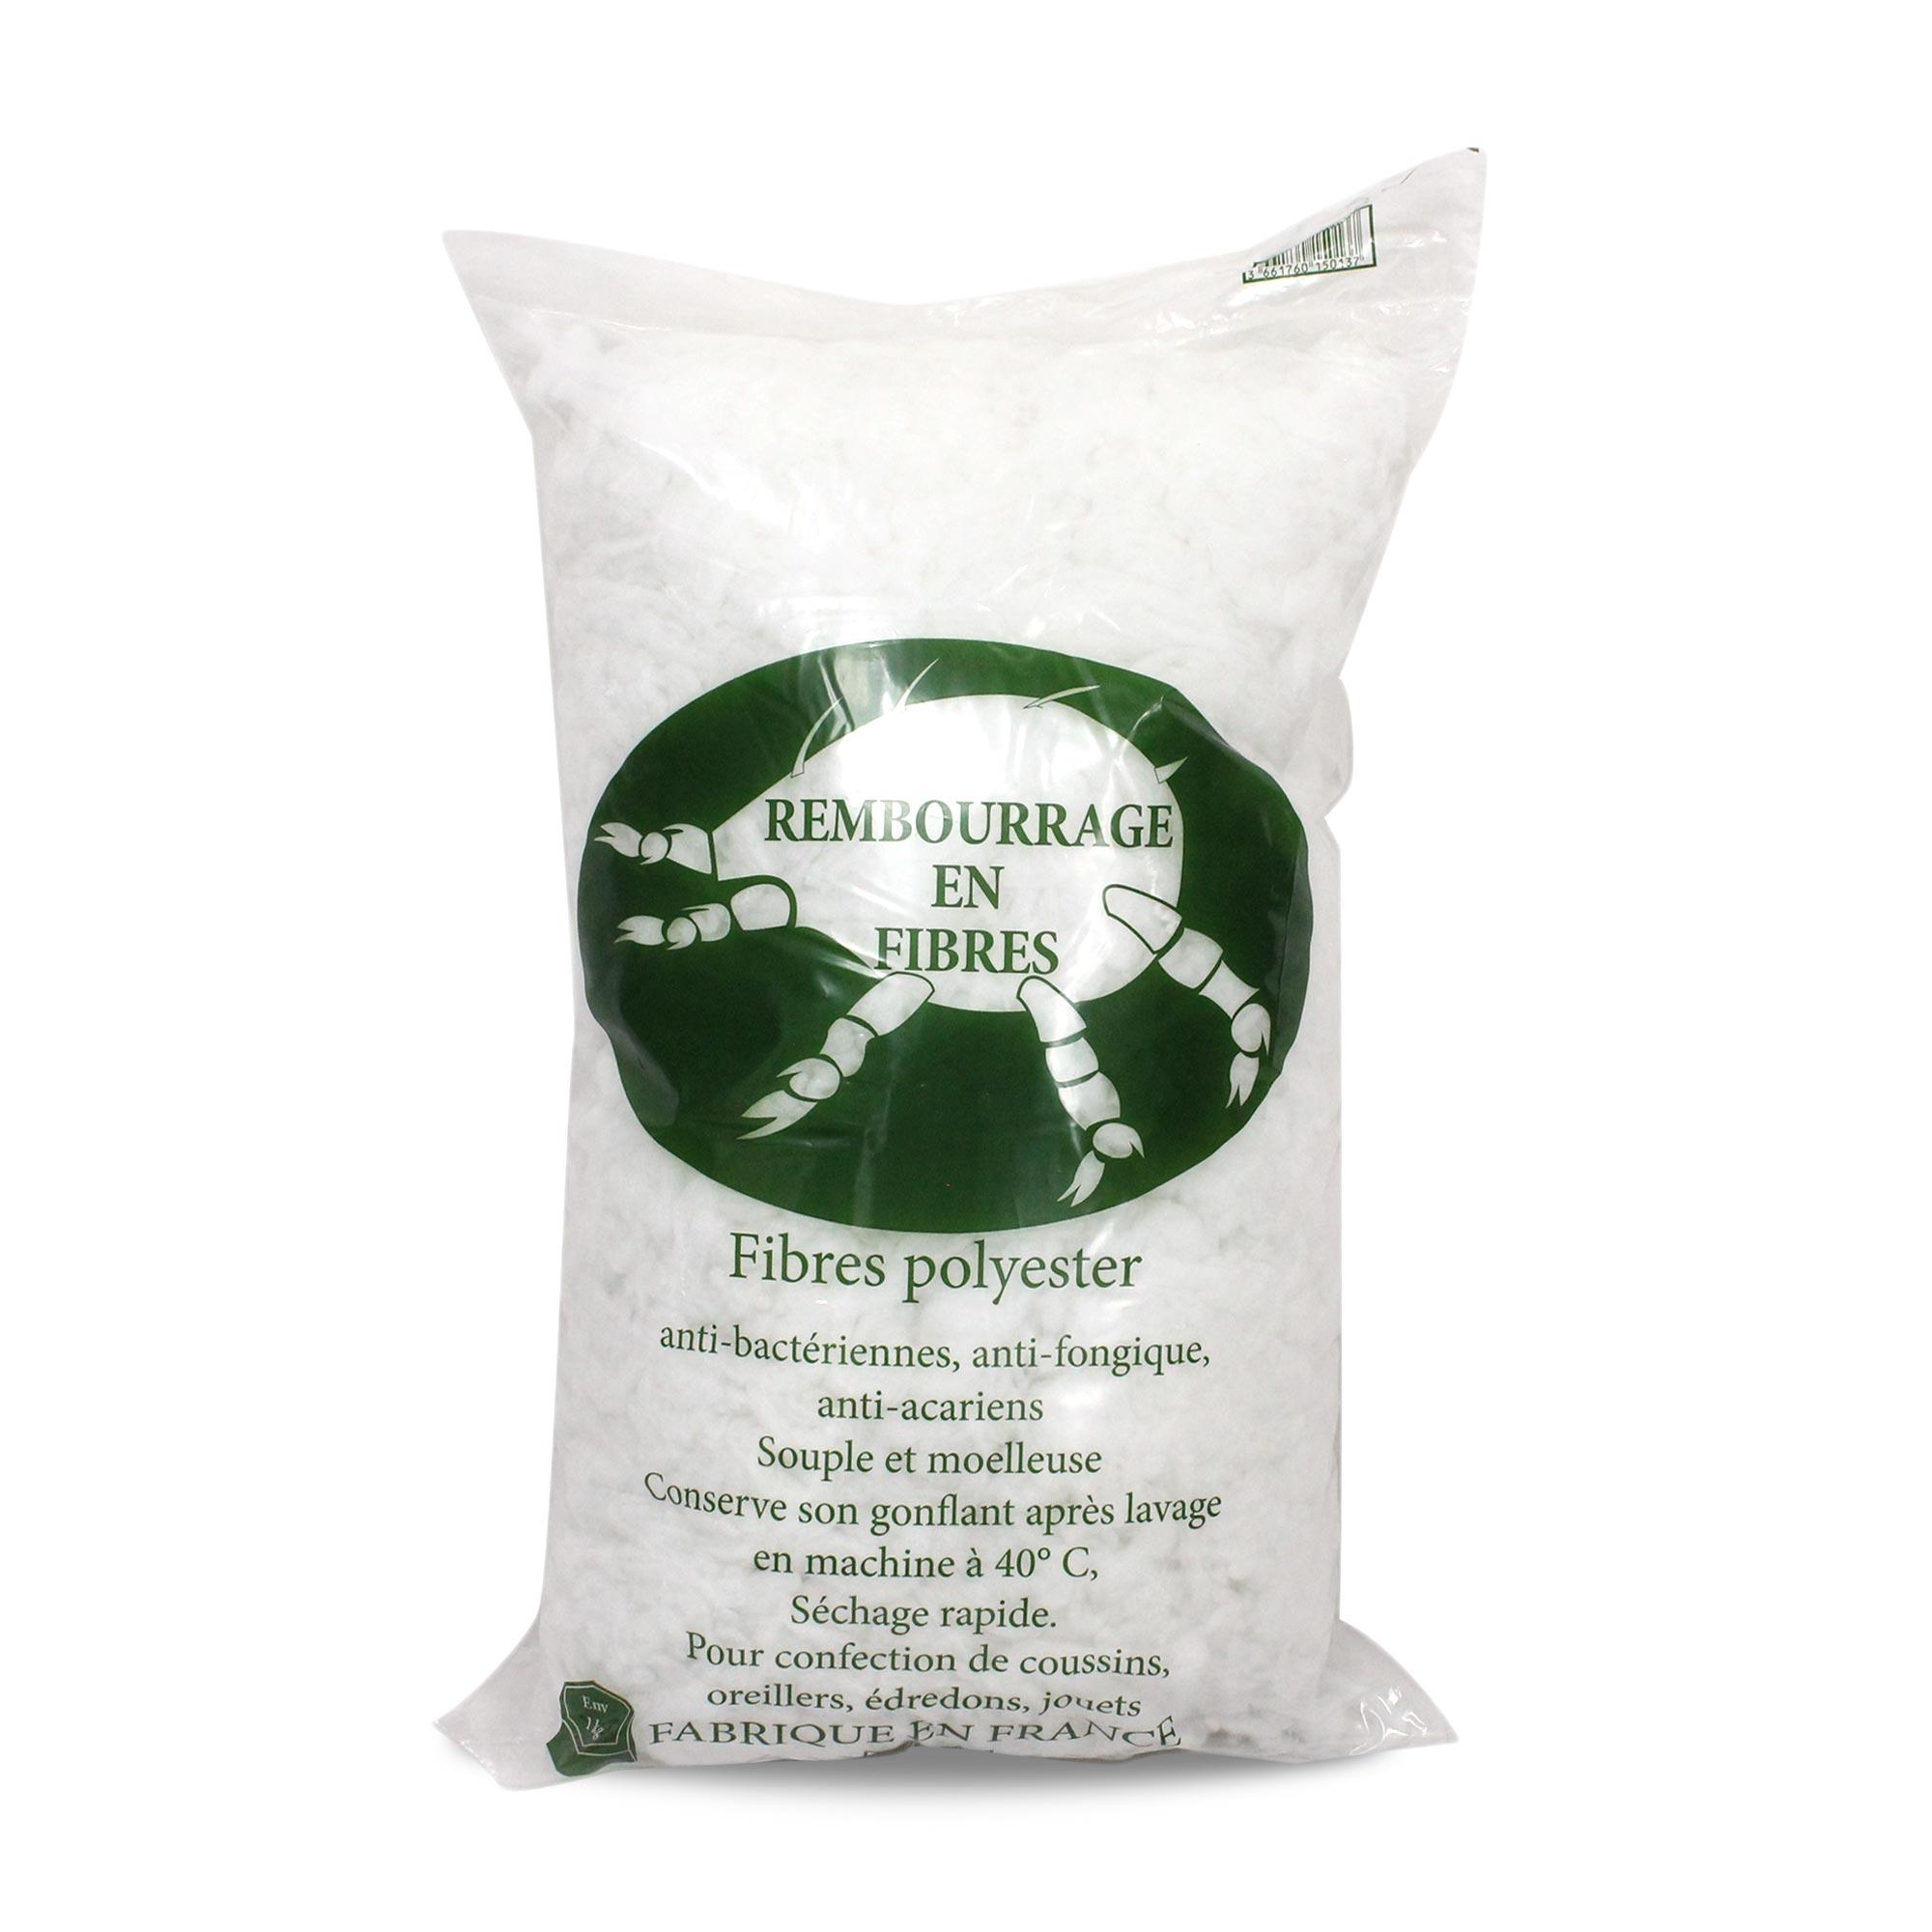 Rembourrage Synthétique Fibres polyester antiacariens sac 1 kg